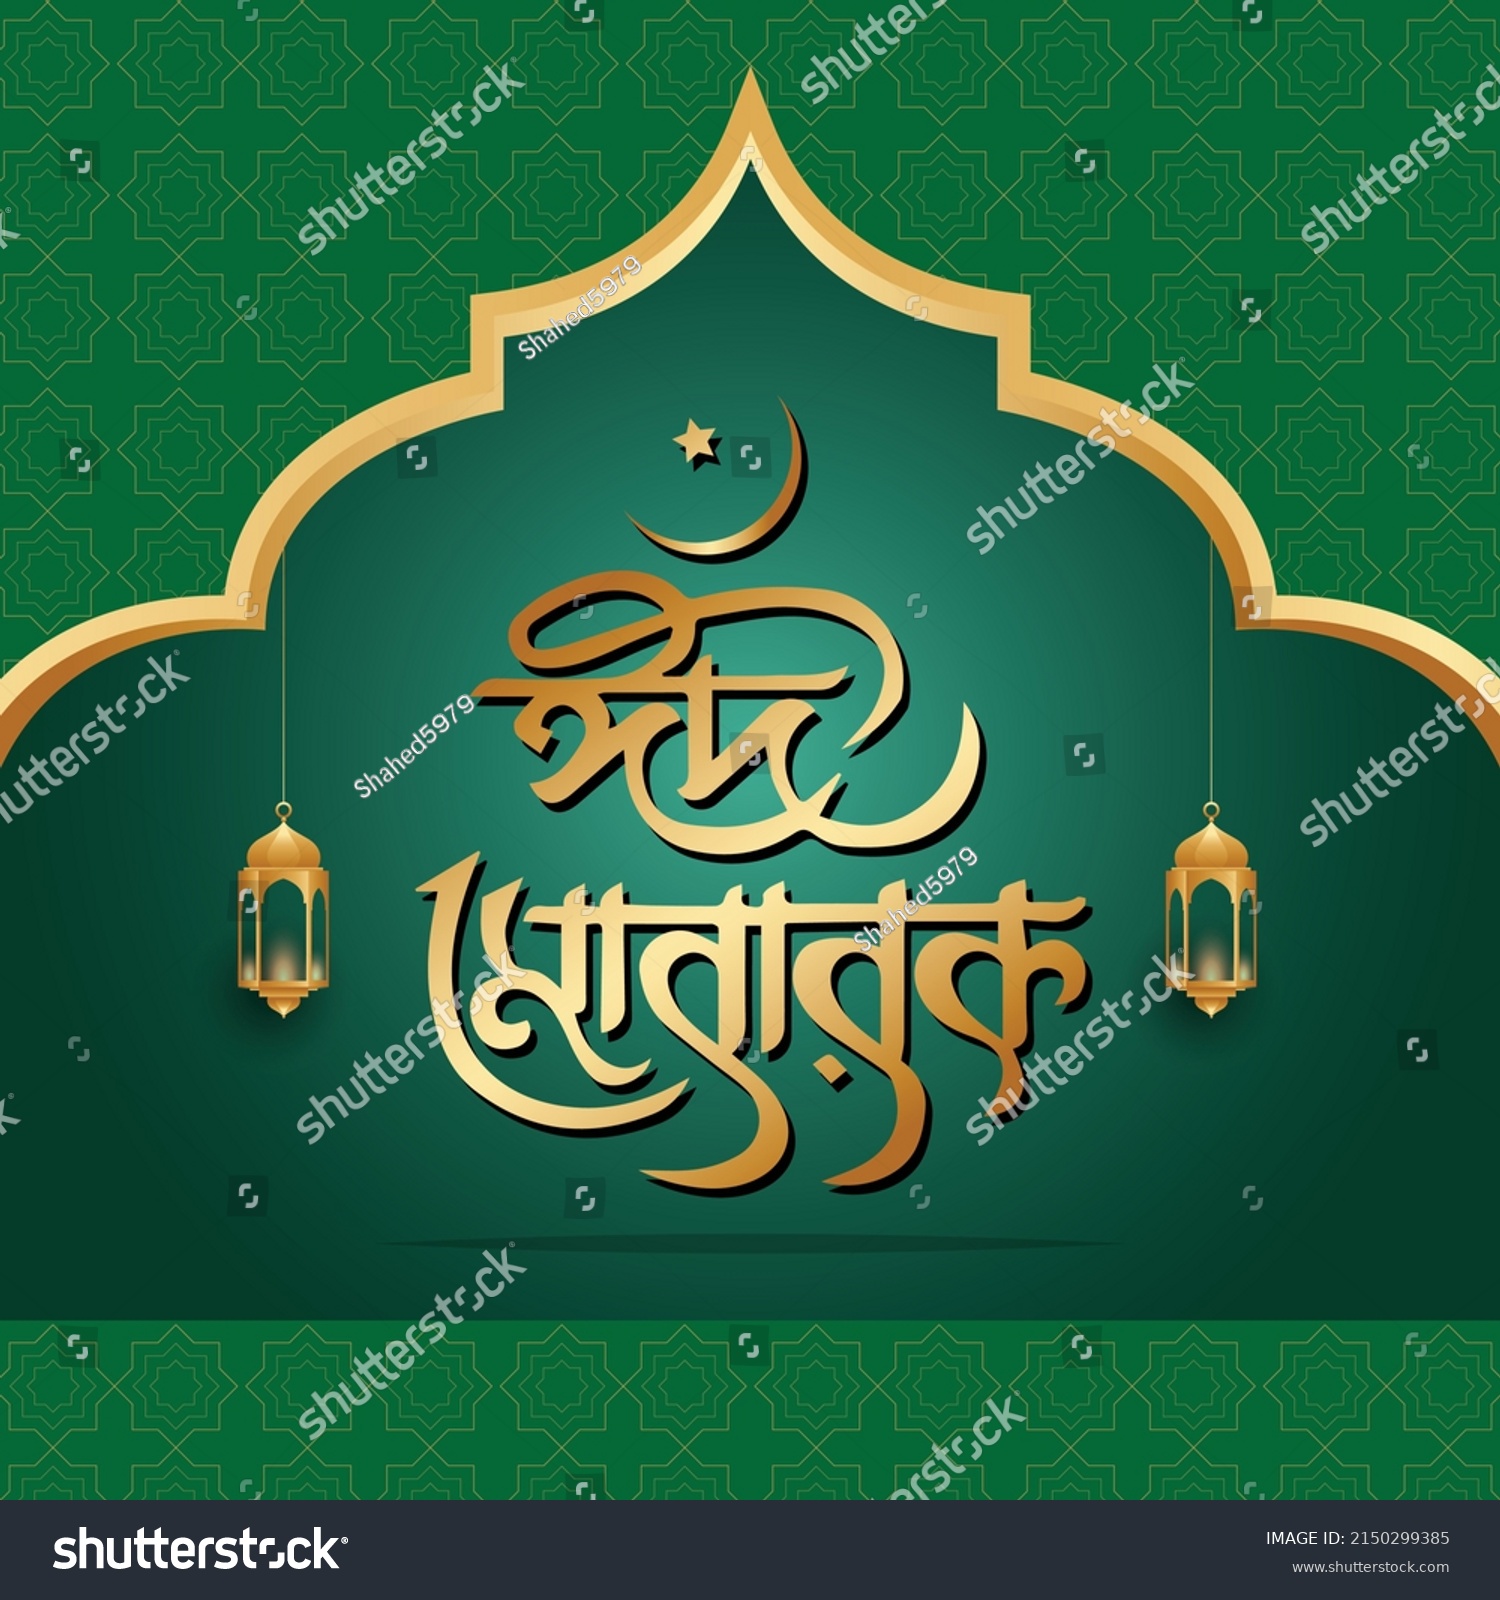 SVG of Green, Golden Background, and Bangla Eid Mubarak Text make a nice design to celebrate the Eid festival. svg